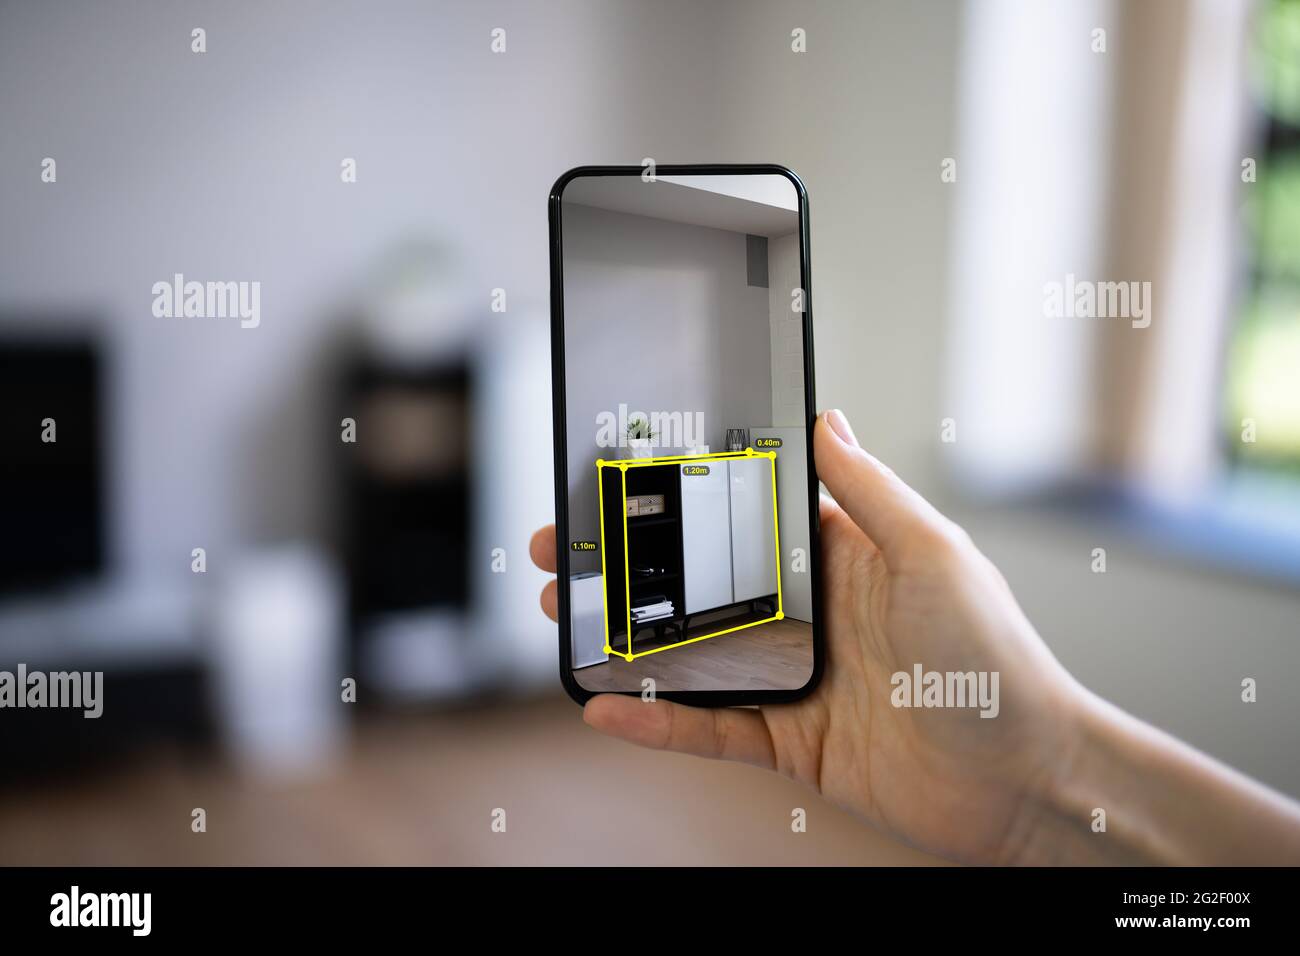 AR Mobile Phone Window Measurement App And Virtual Meter Stock Photo